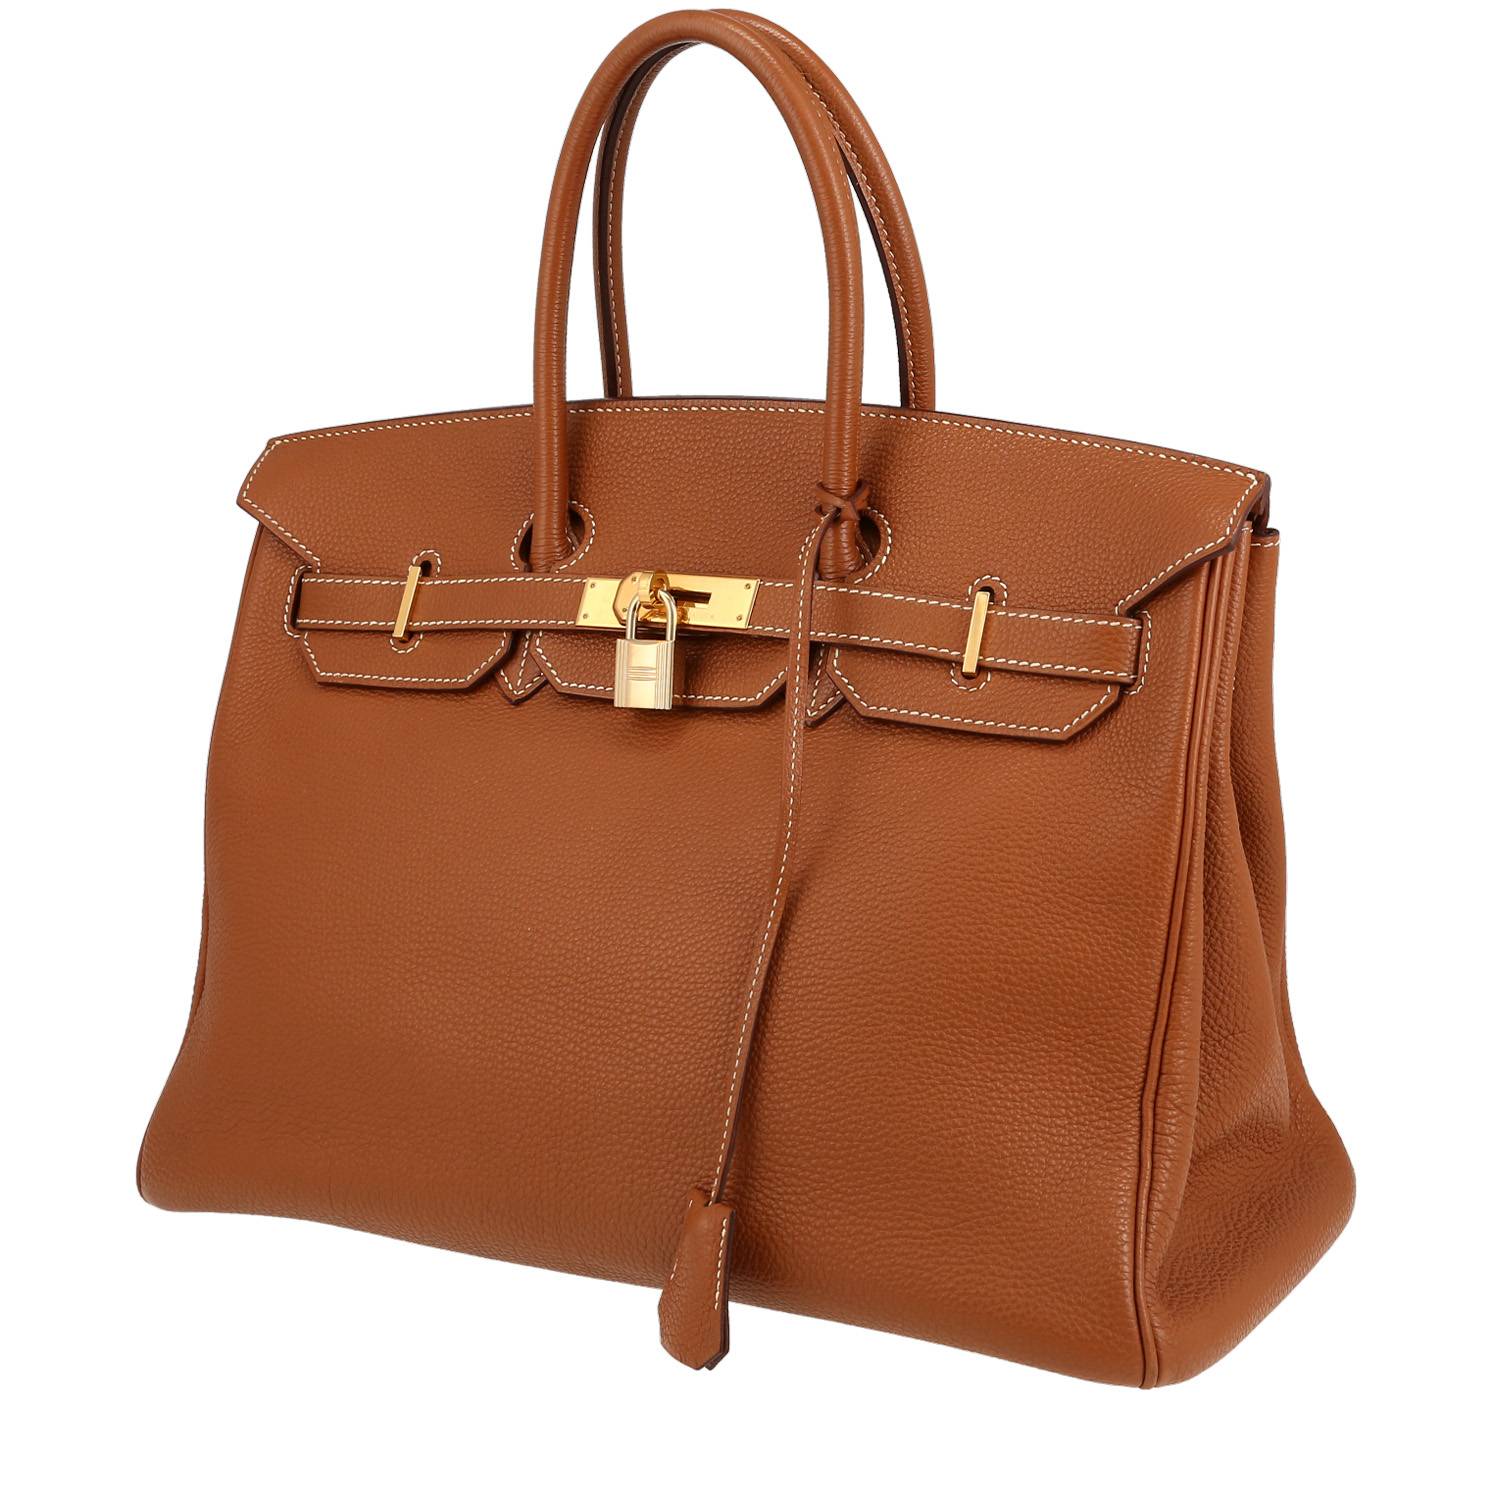 Birkin 35 cm Handbag In Togo Leather